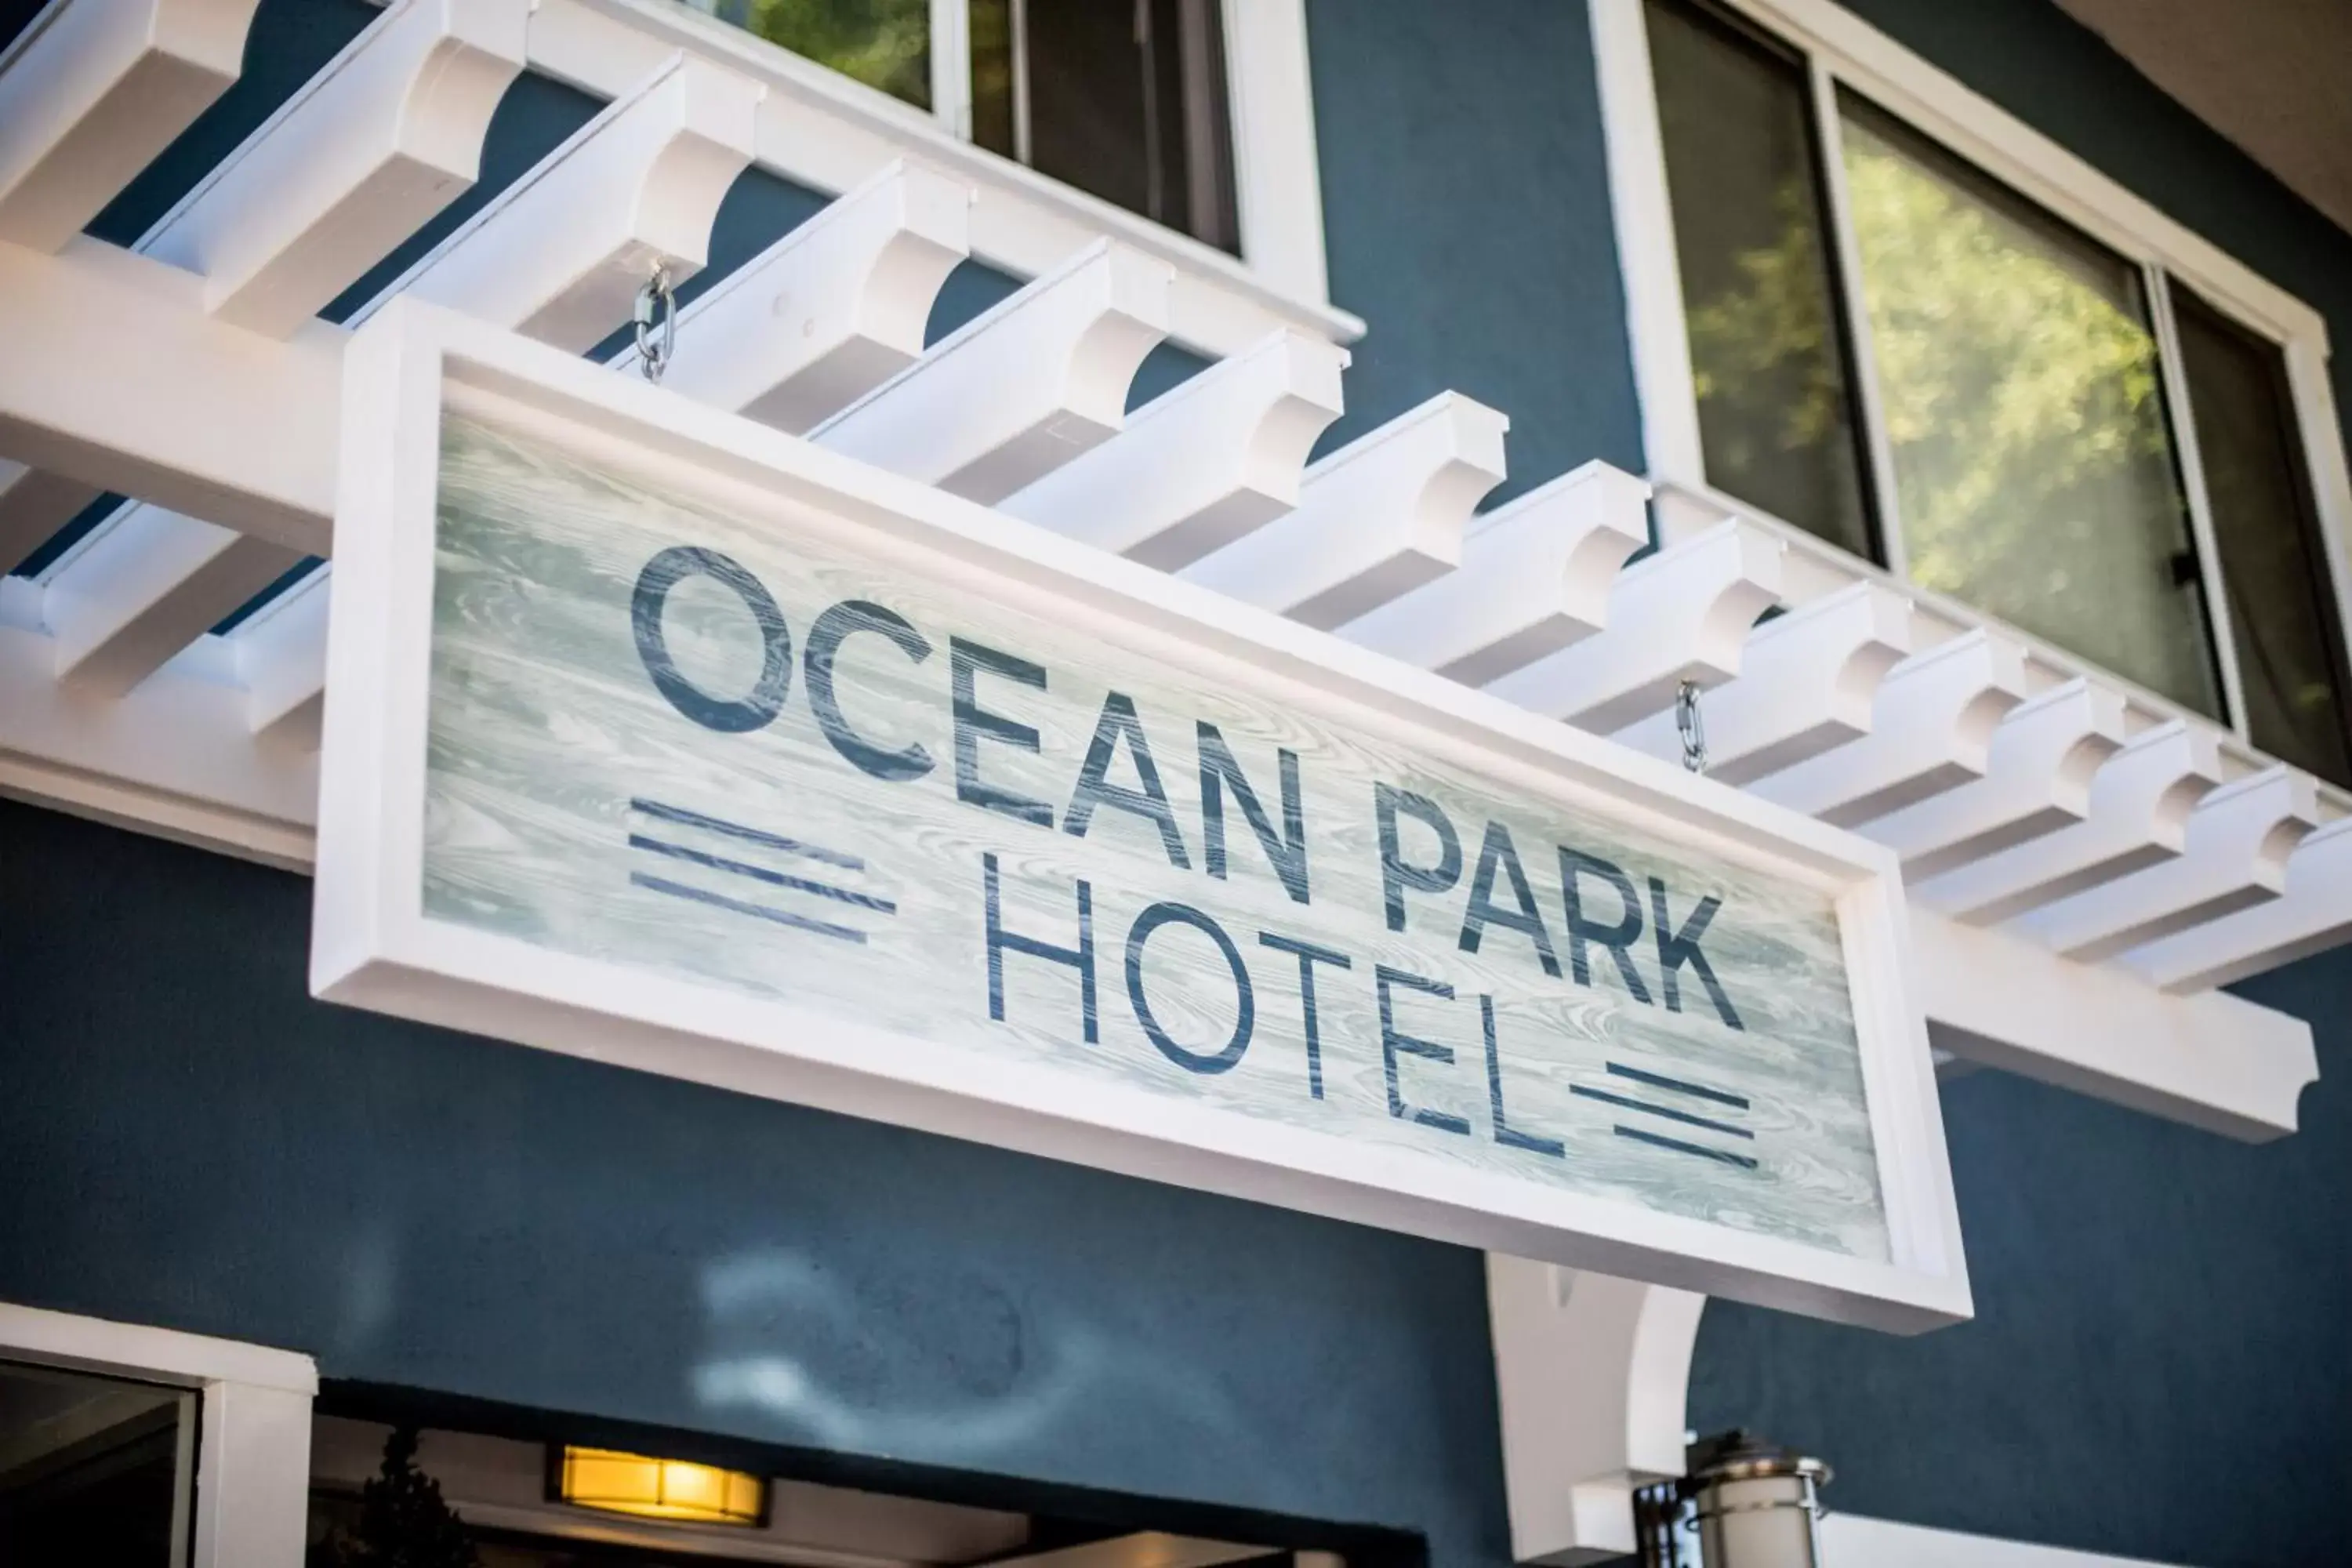 Property logo or sign in Ocean Park Hotel